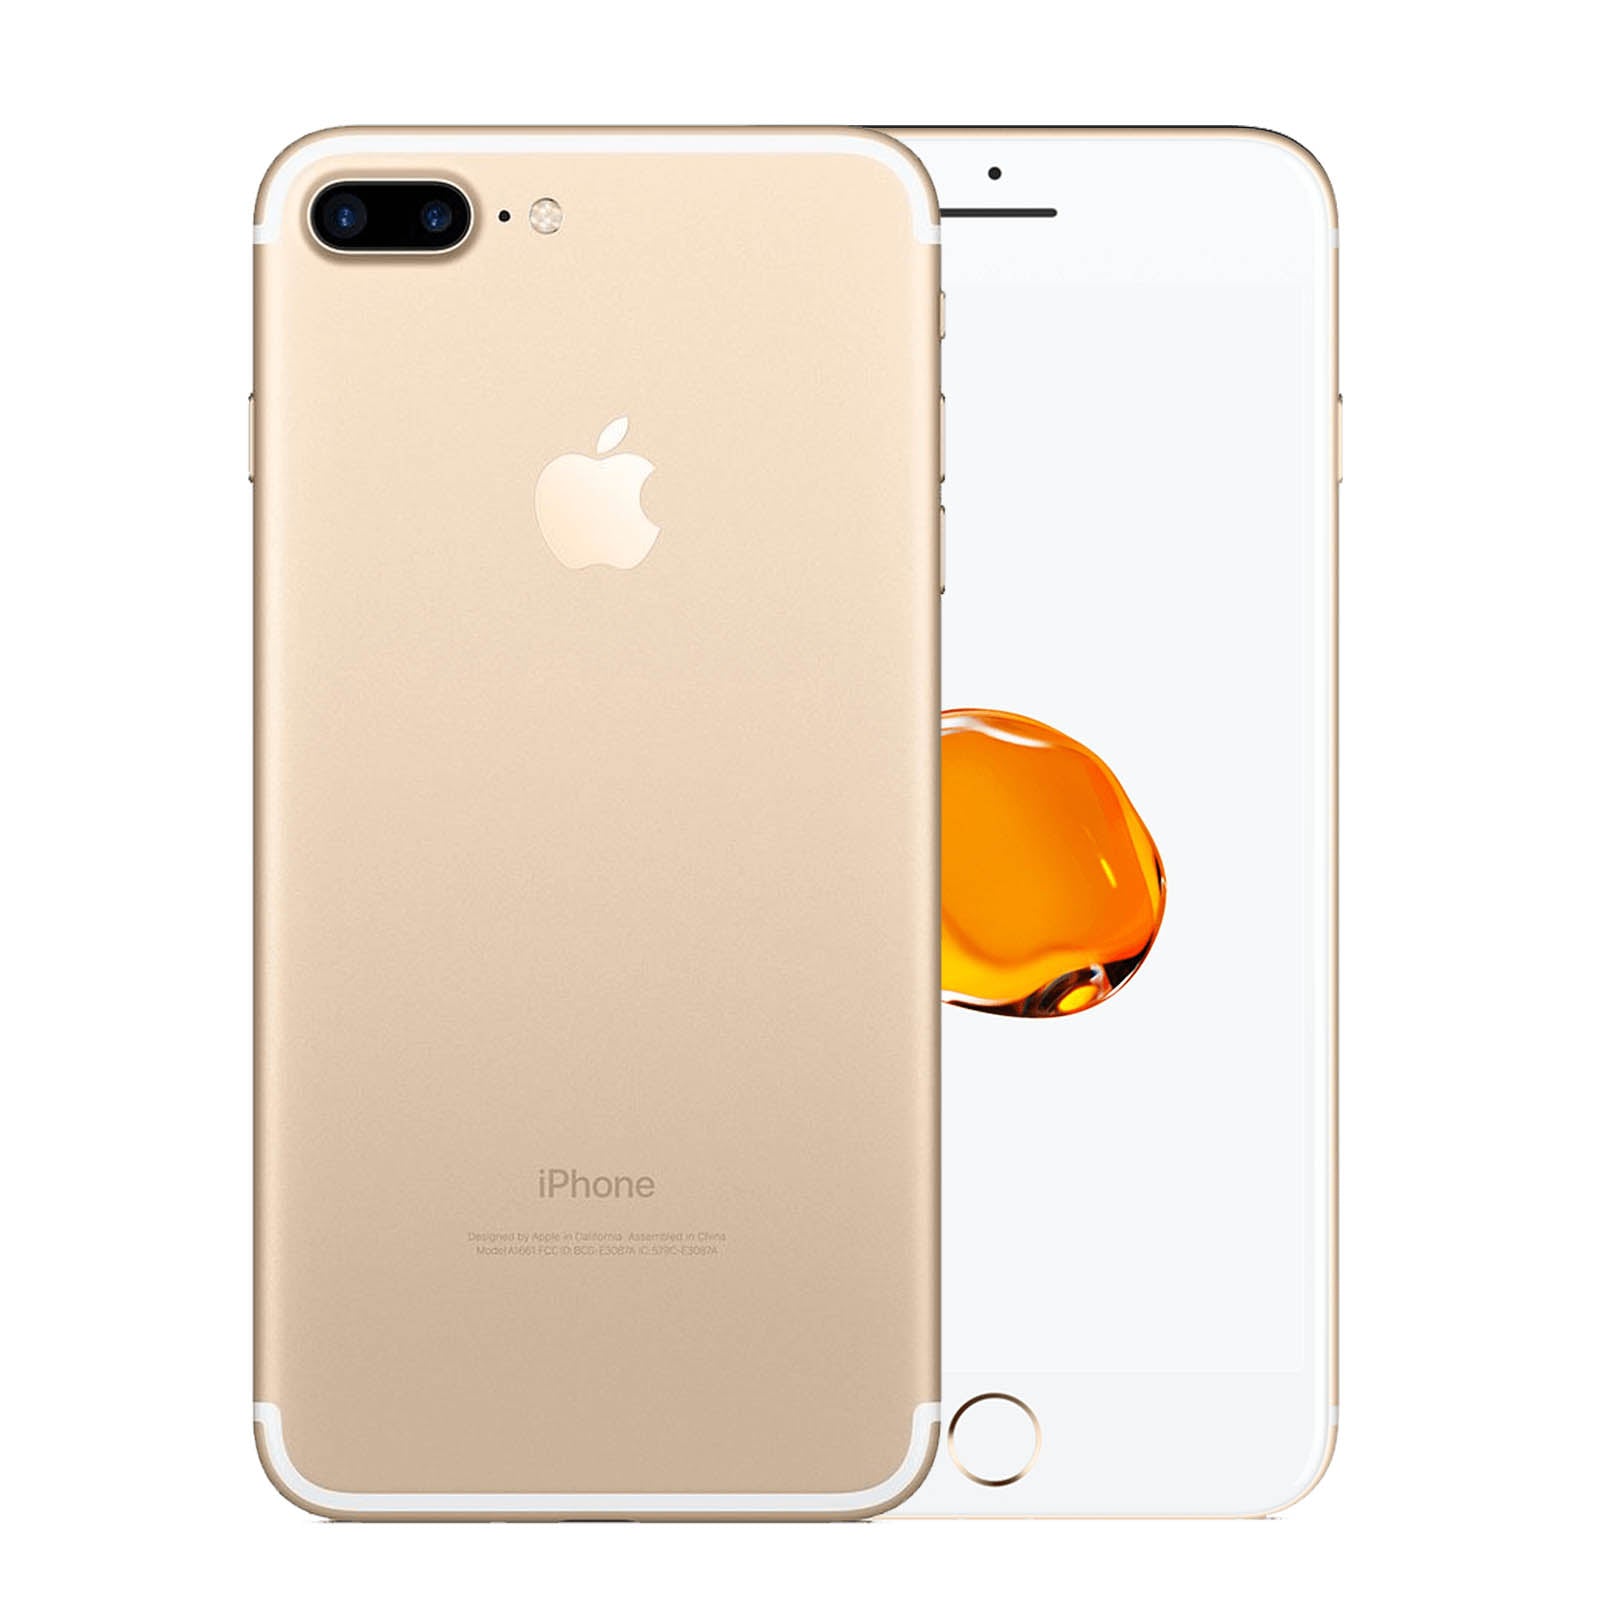 Apple iPhone 7 Plus 32GB Gold Good - Unlocked